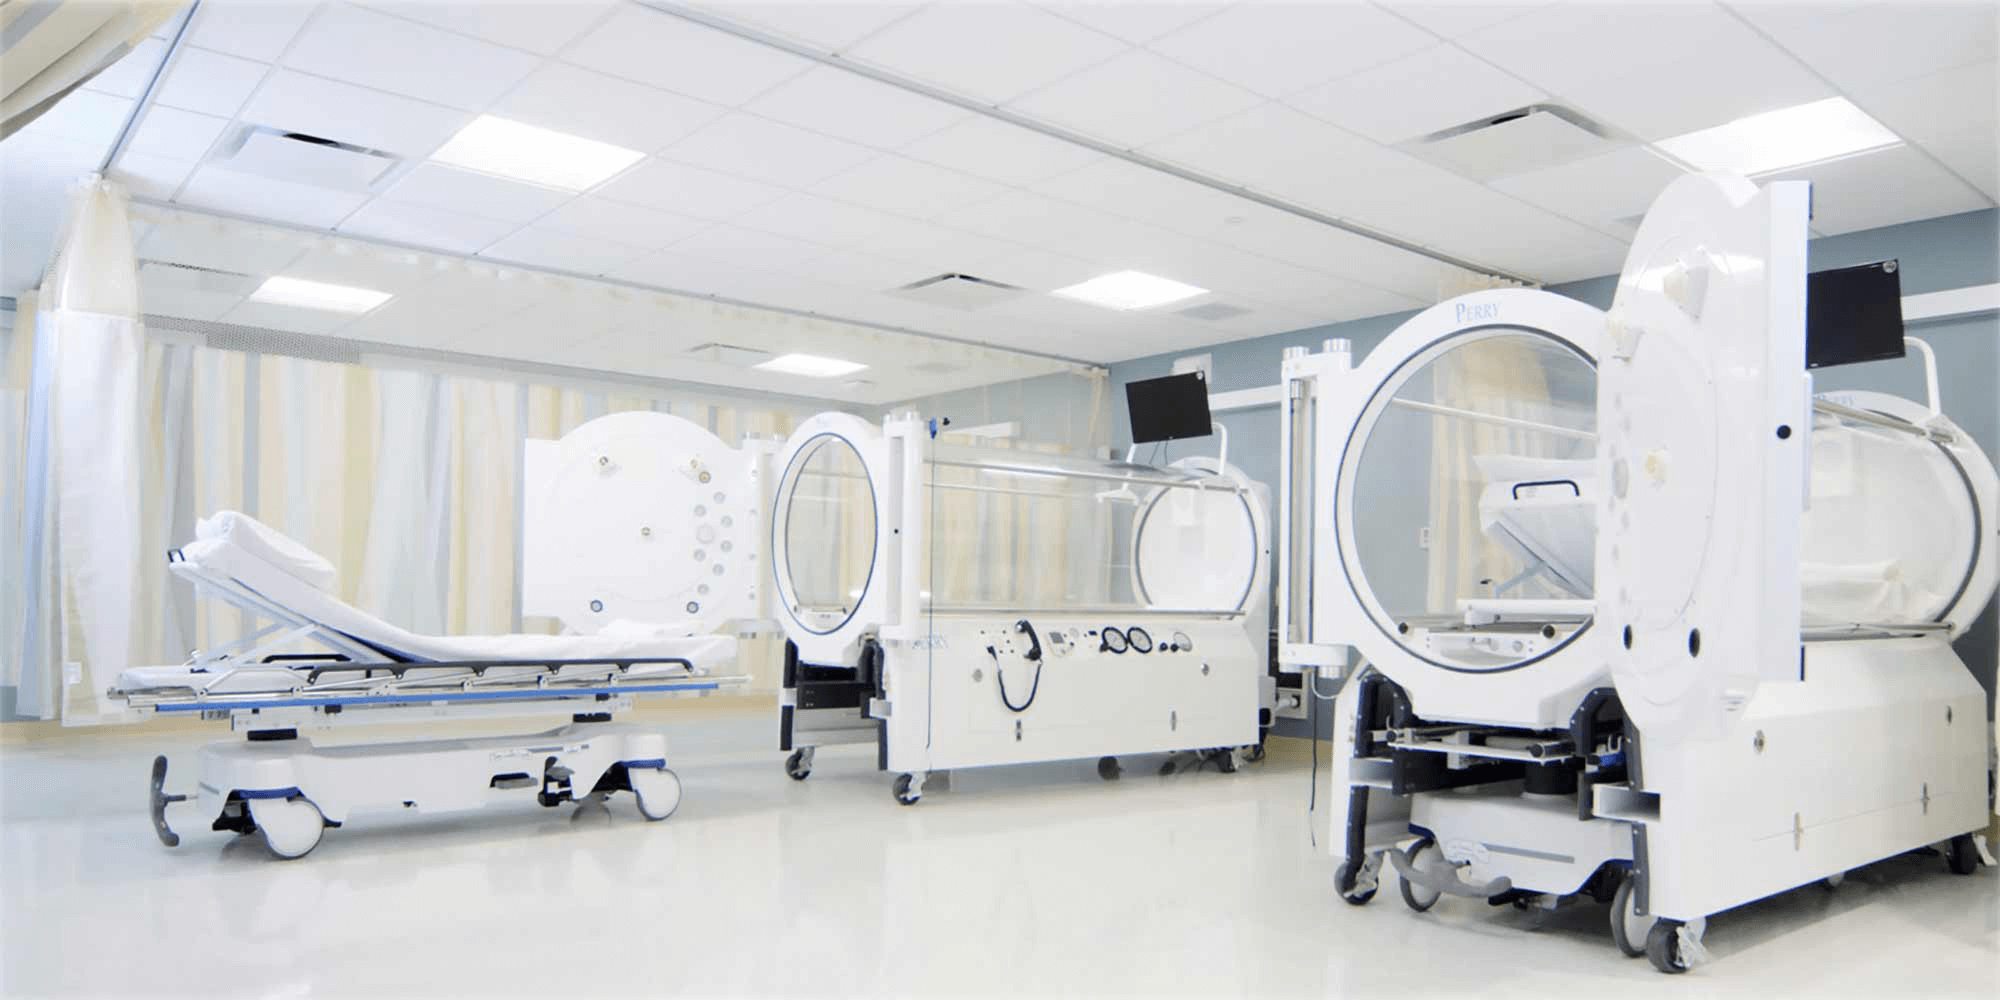 1.3ATA portable hyperbaric chamber